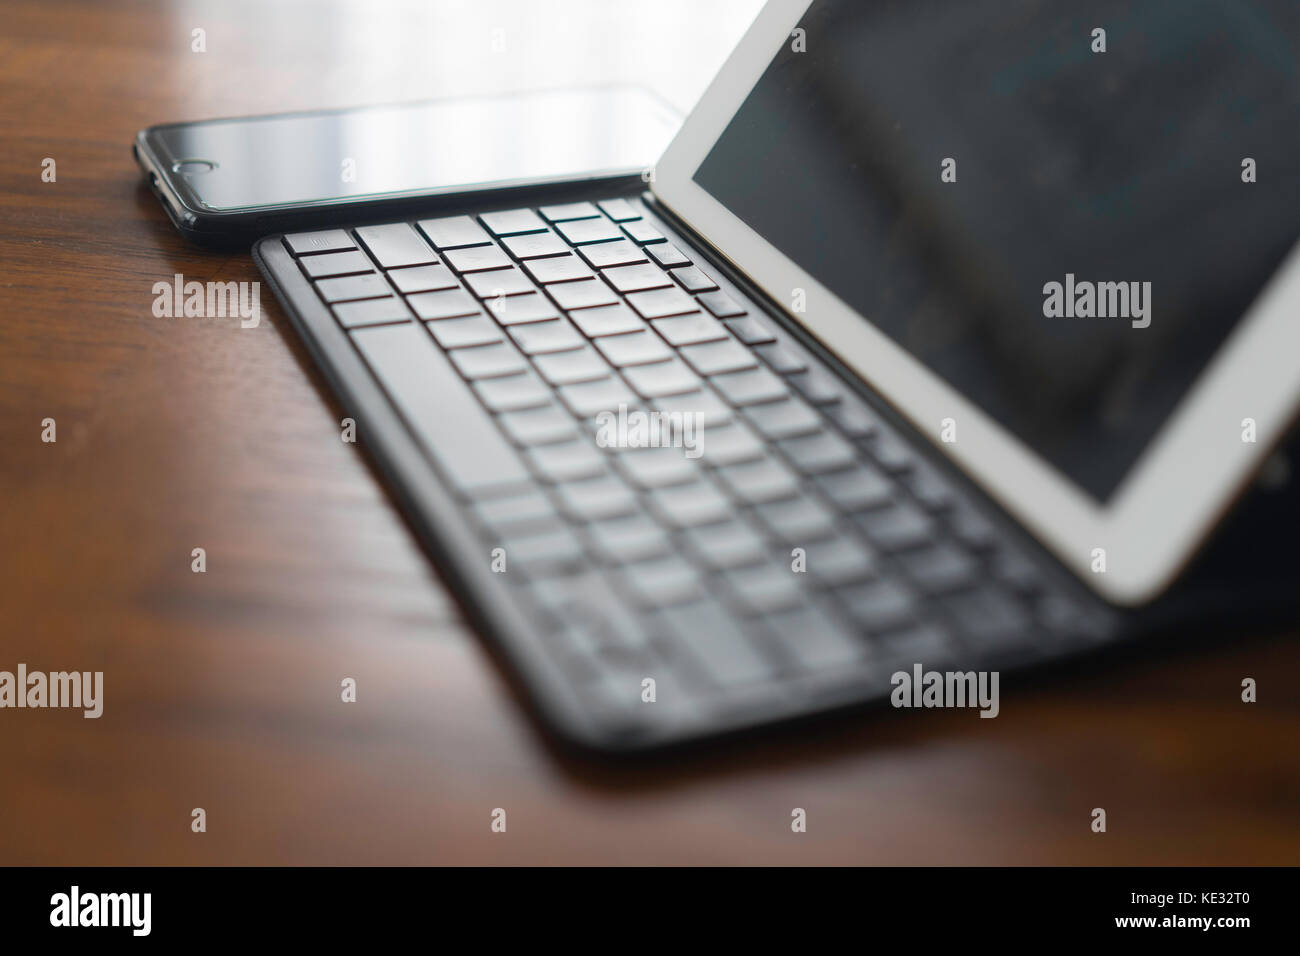 Home office con i gadget - tablet e telefono cellulare Foto Stock